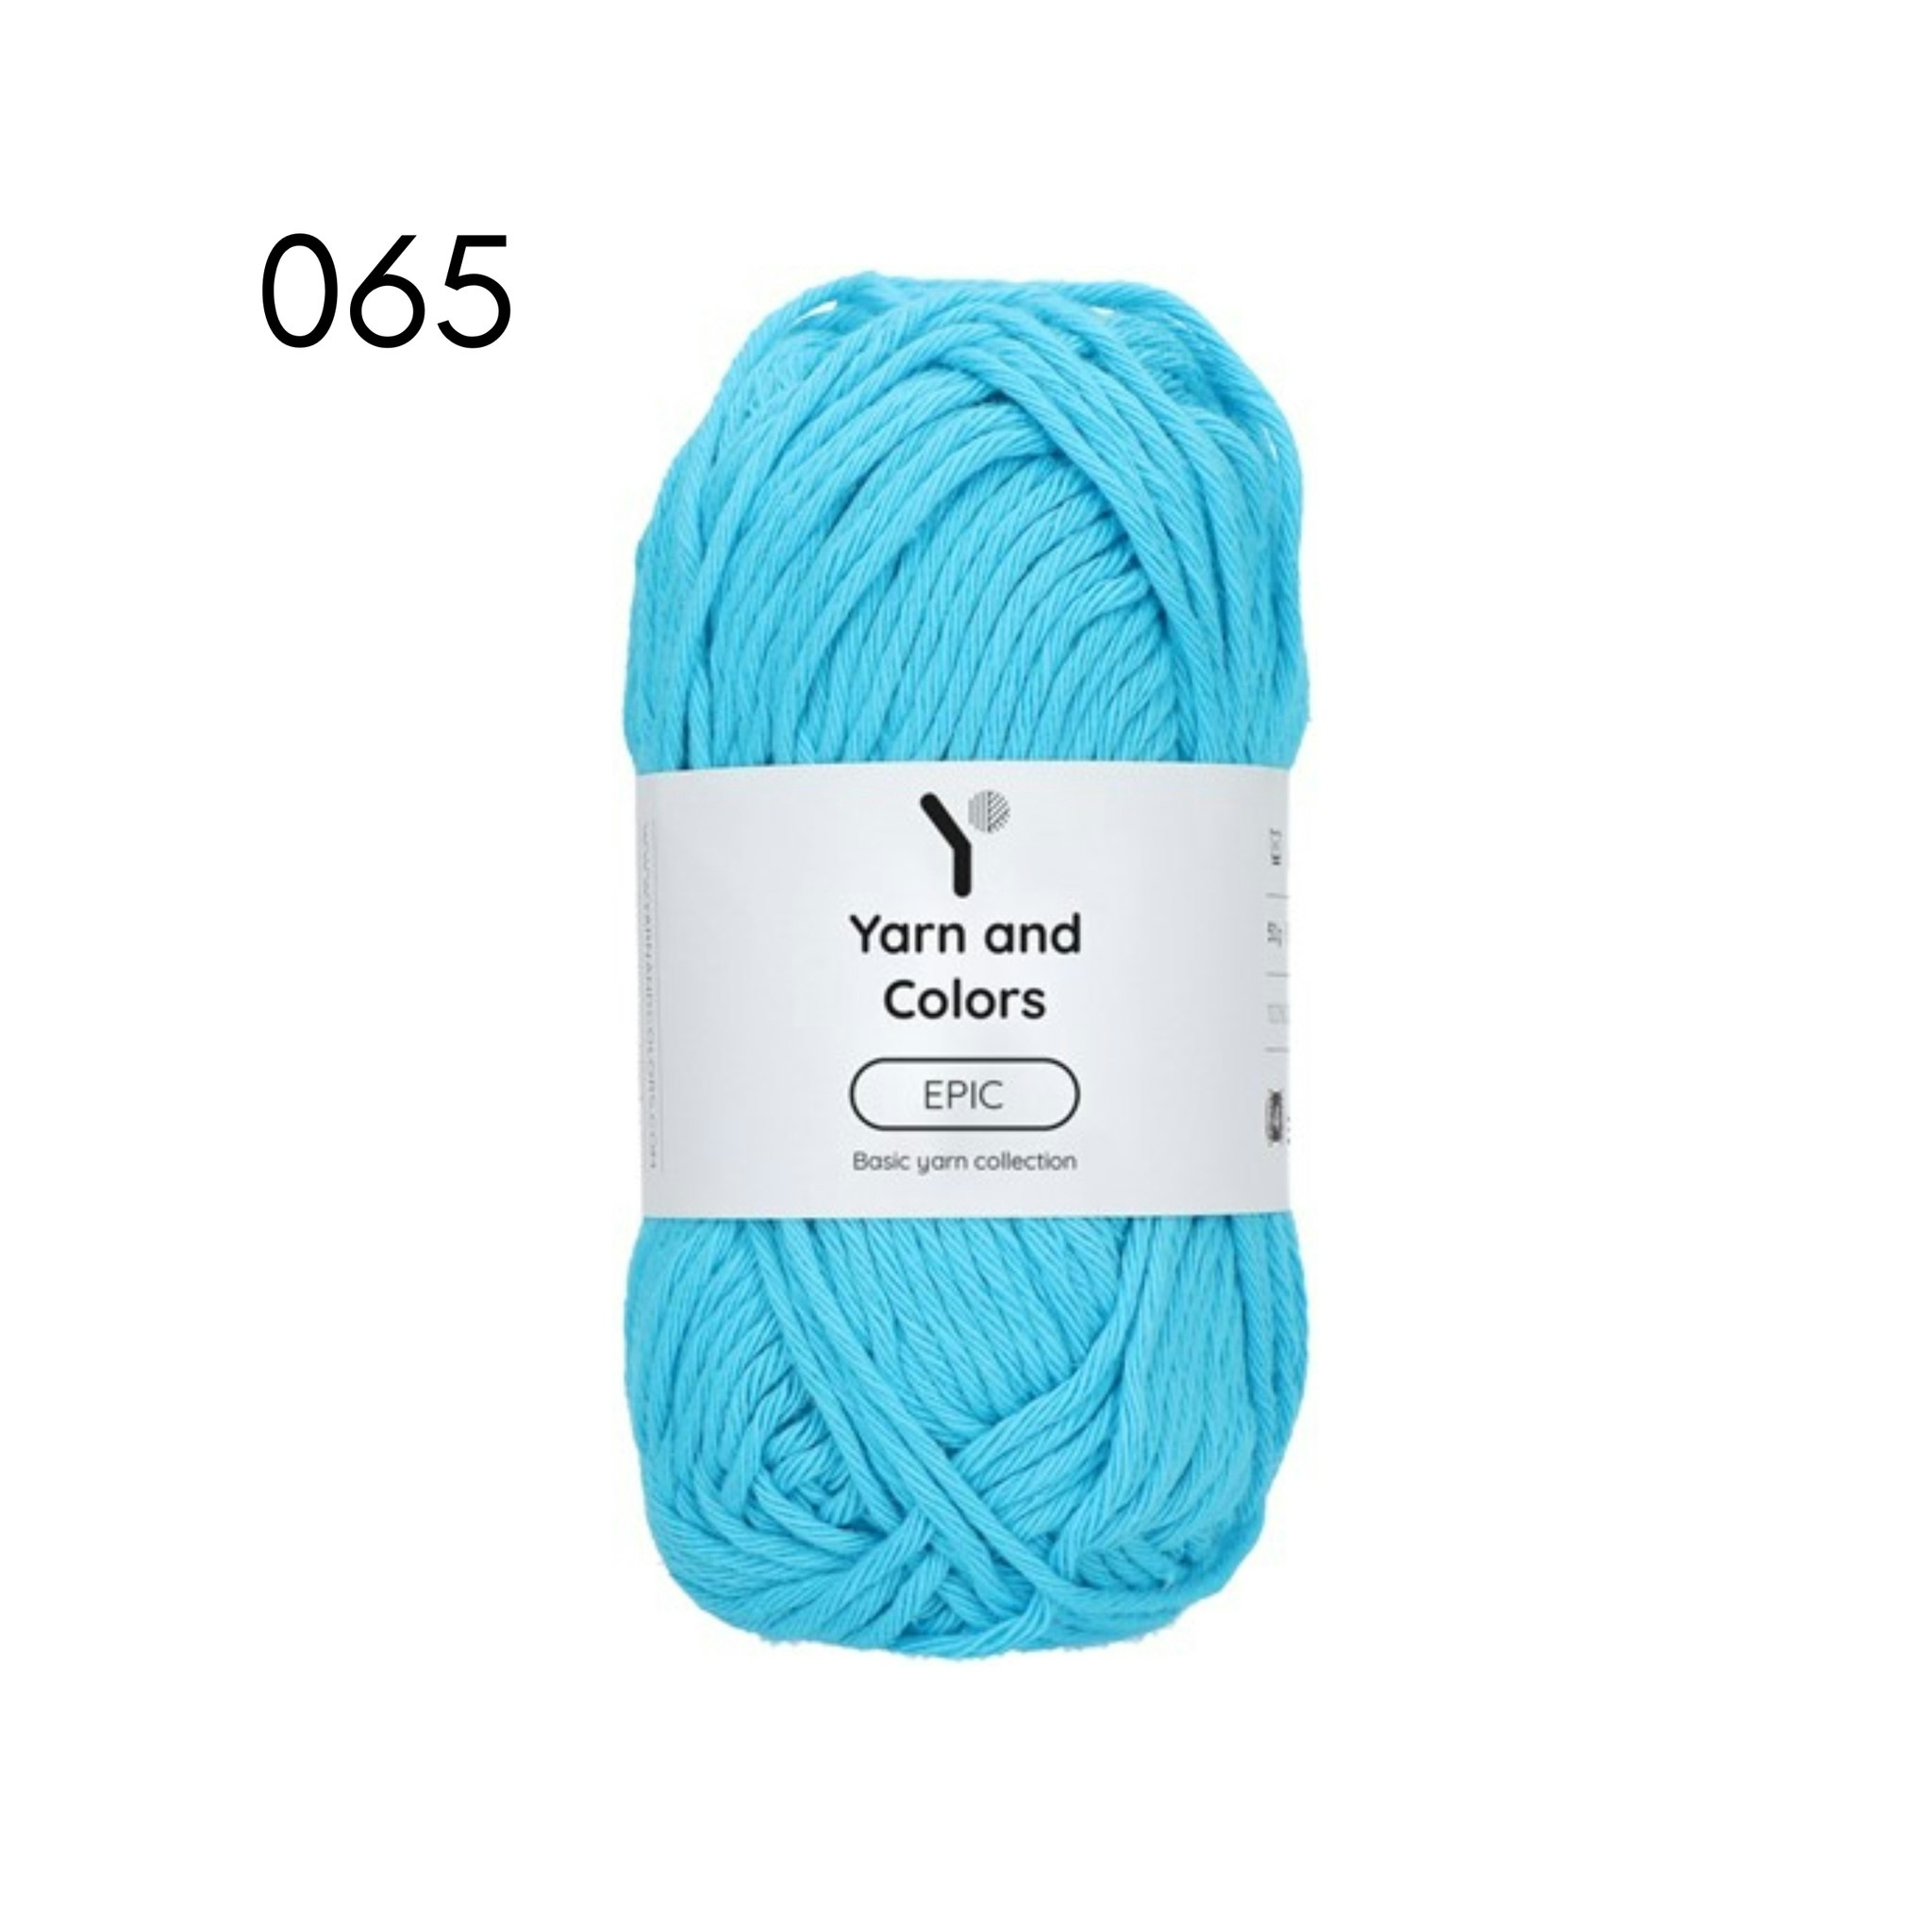 Yarn and colors - EPIC 8/8 bomullsgarn